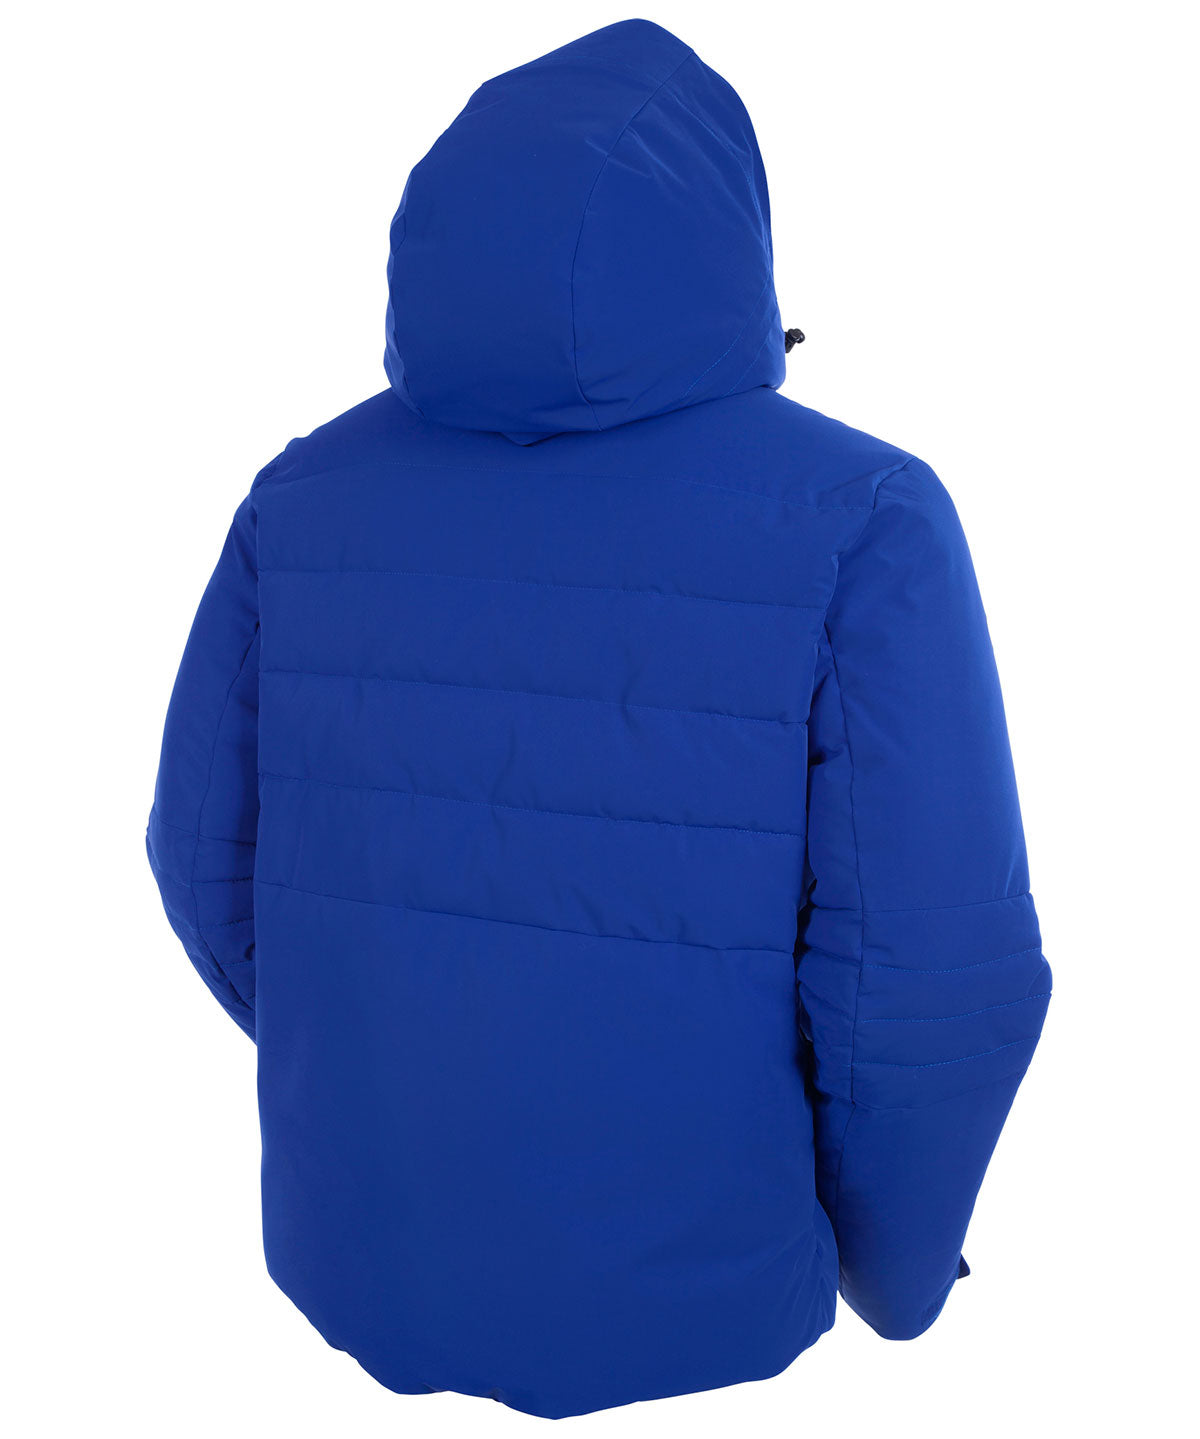 Men's twill ski jacket with detachable hood